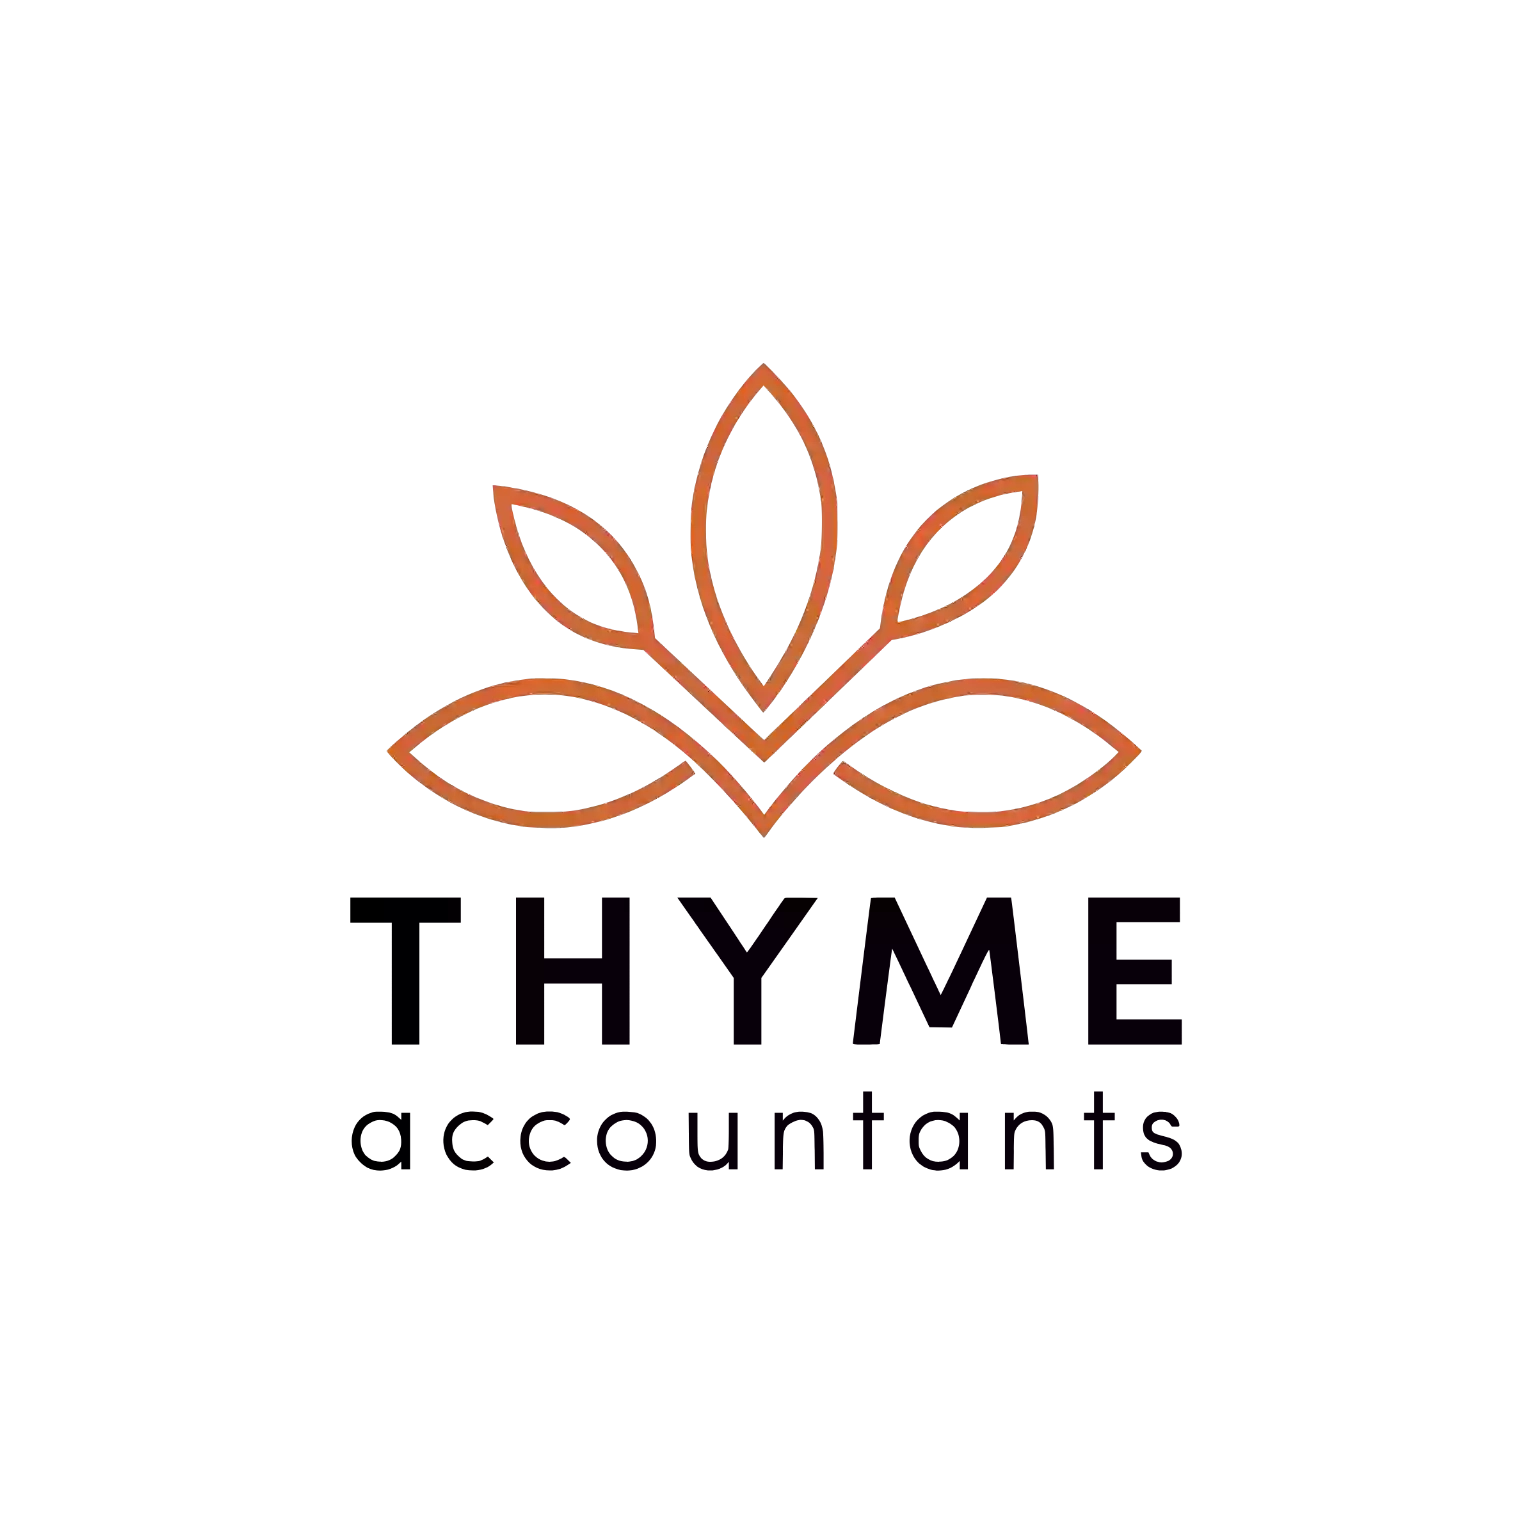 Thyme Accountants